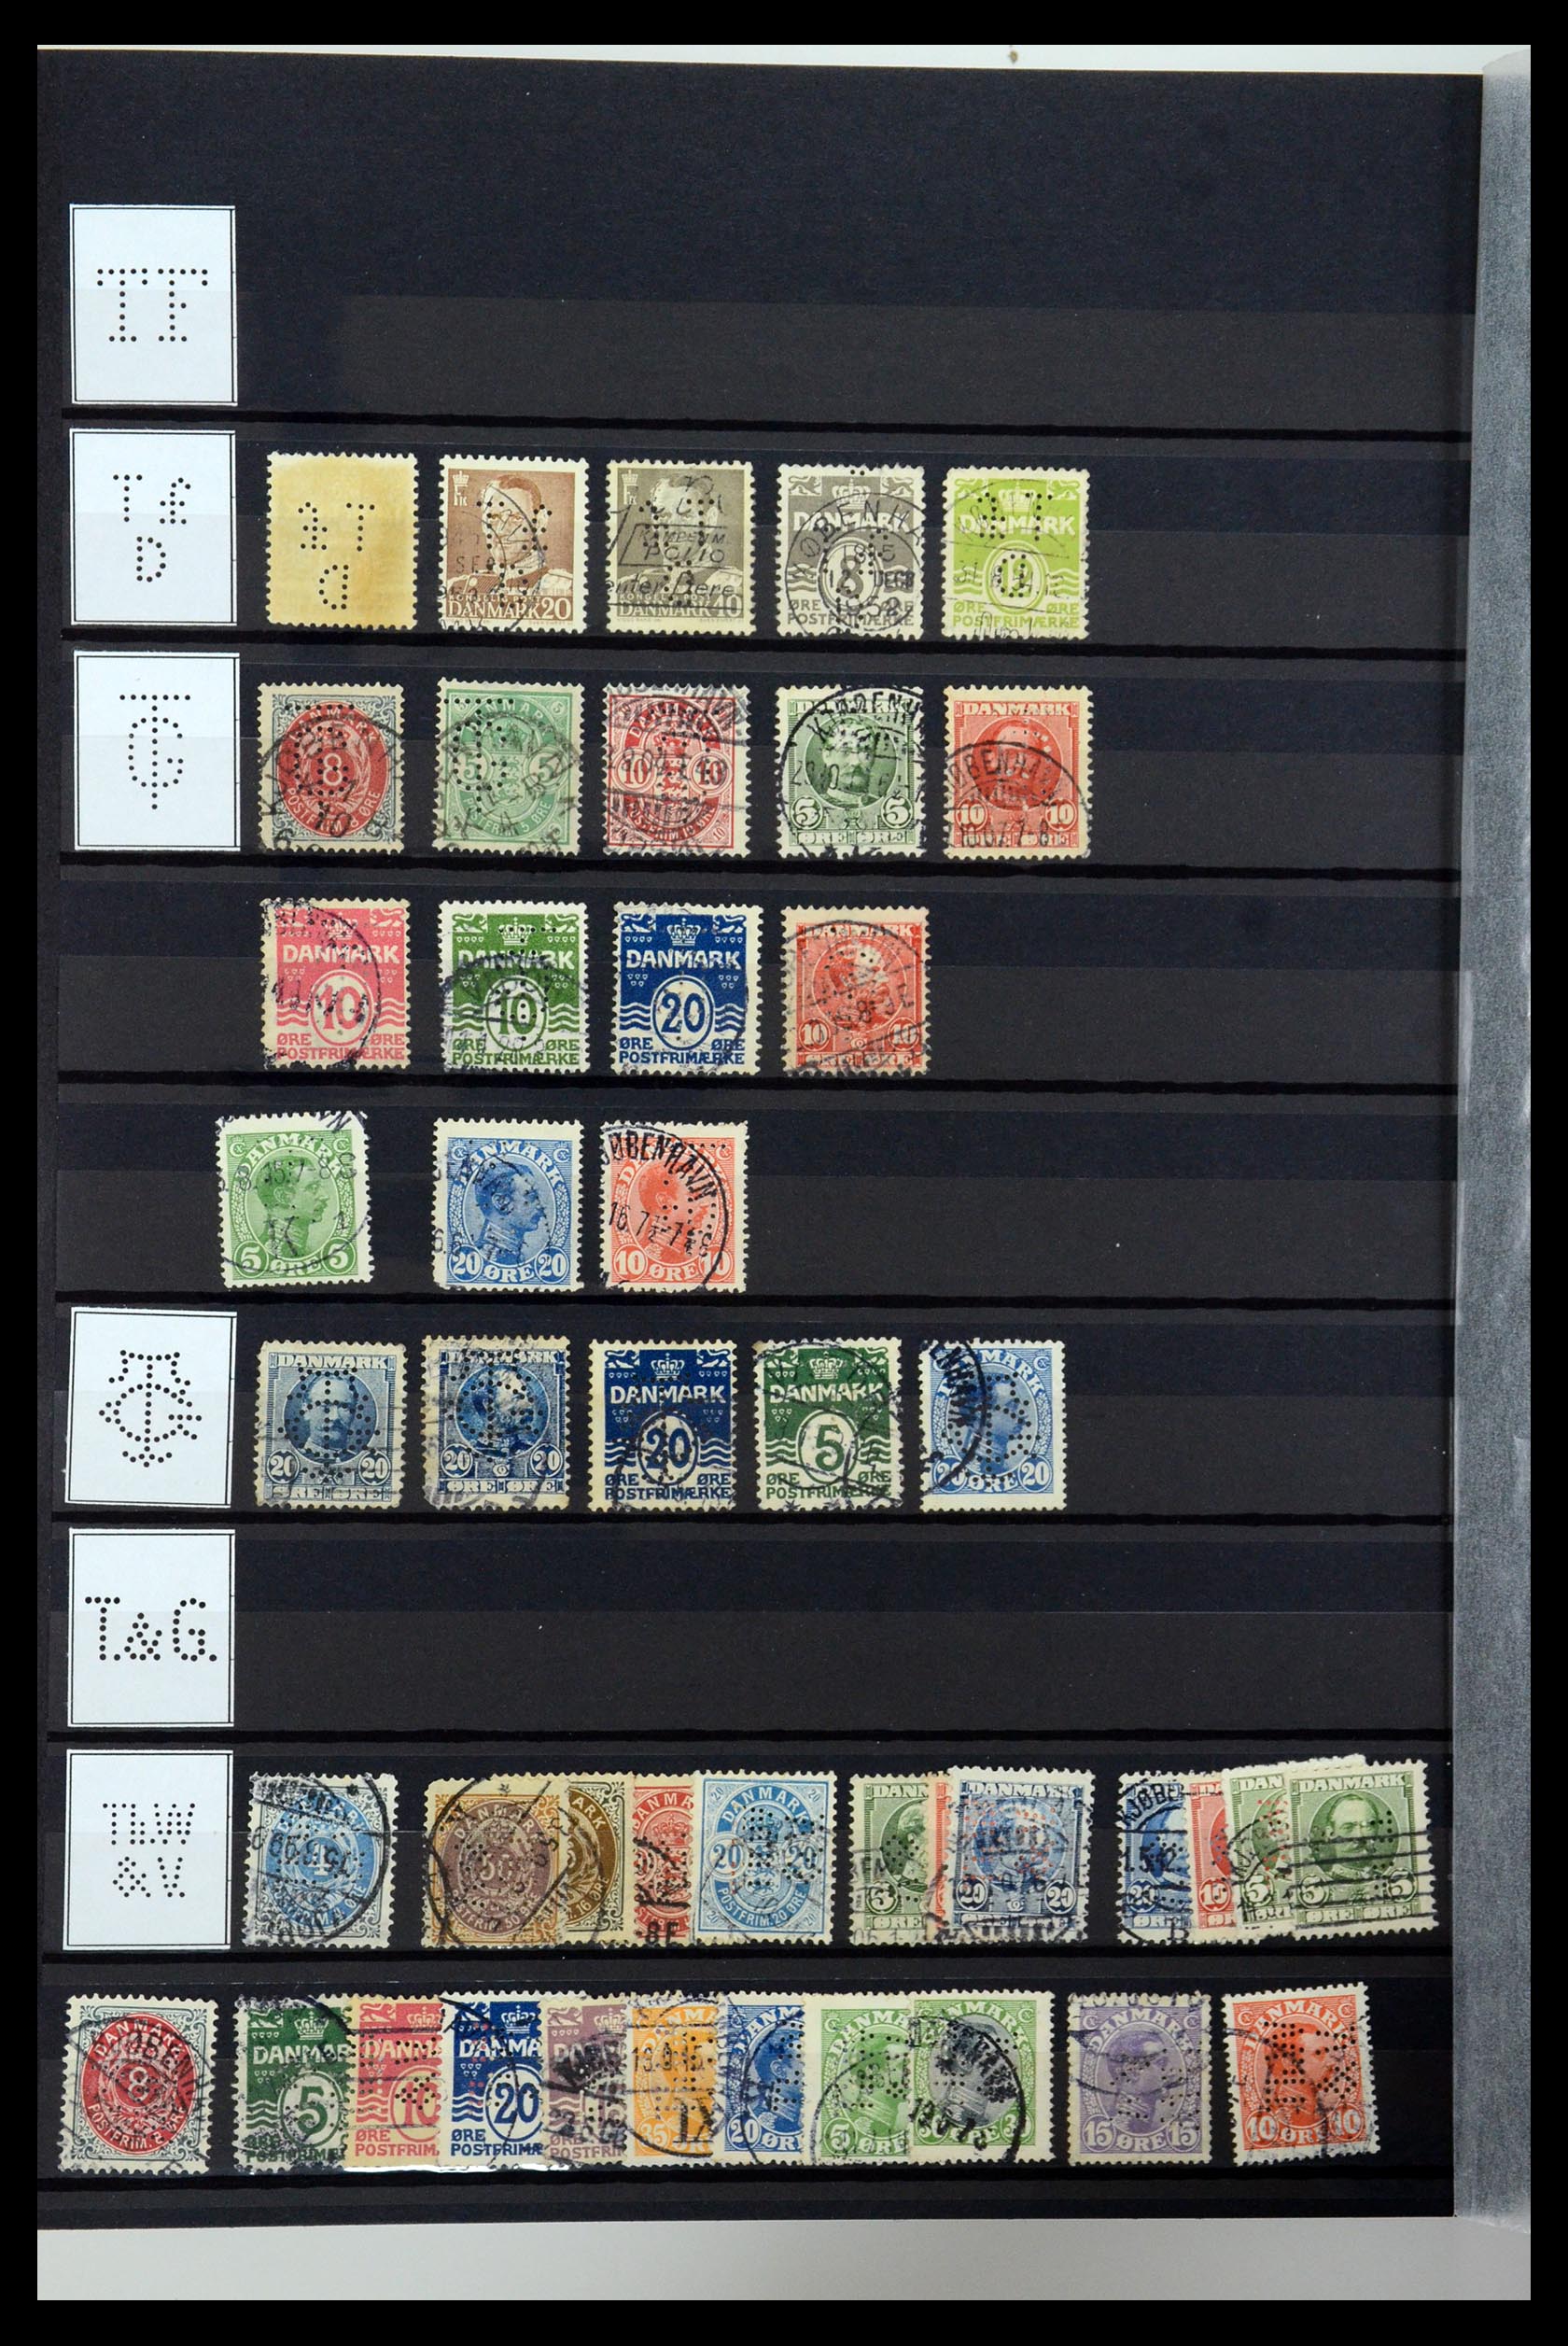 36396 214 - Stamp collection 36396 Denmark perfins.